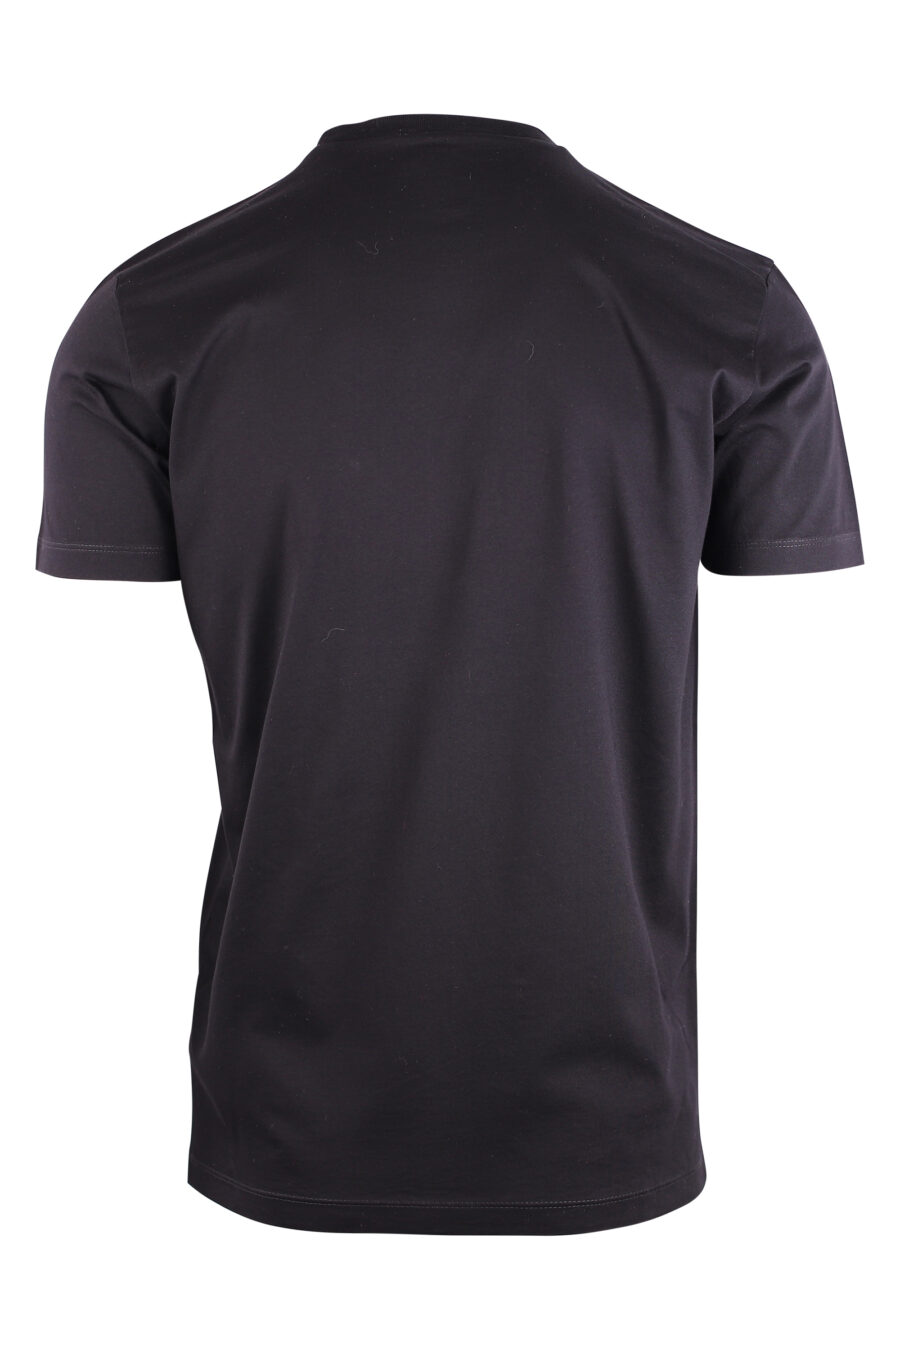 Schwarzes T-Shirt mit einfarbigem "ibra"-Logo - IMG 3110